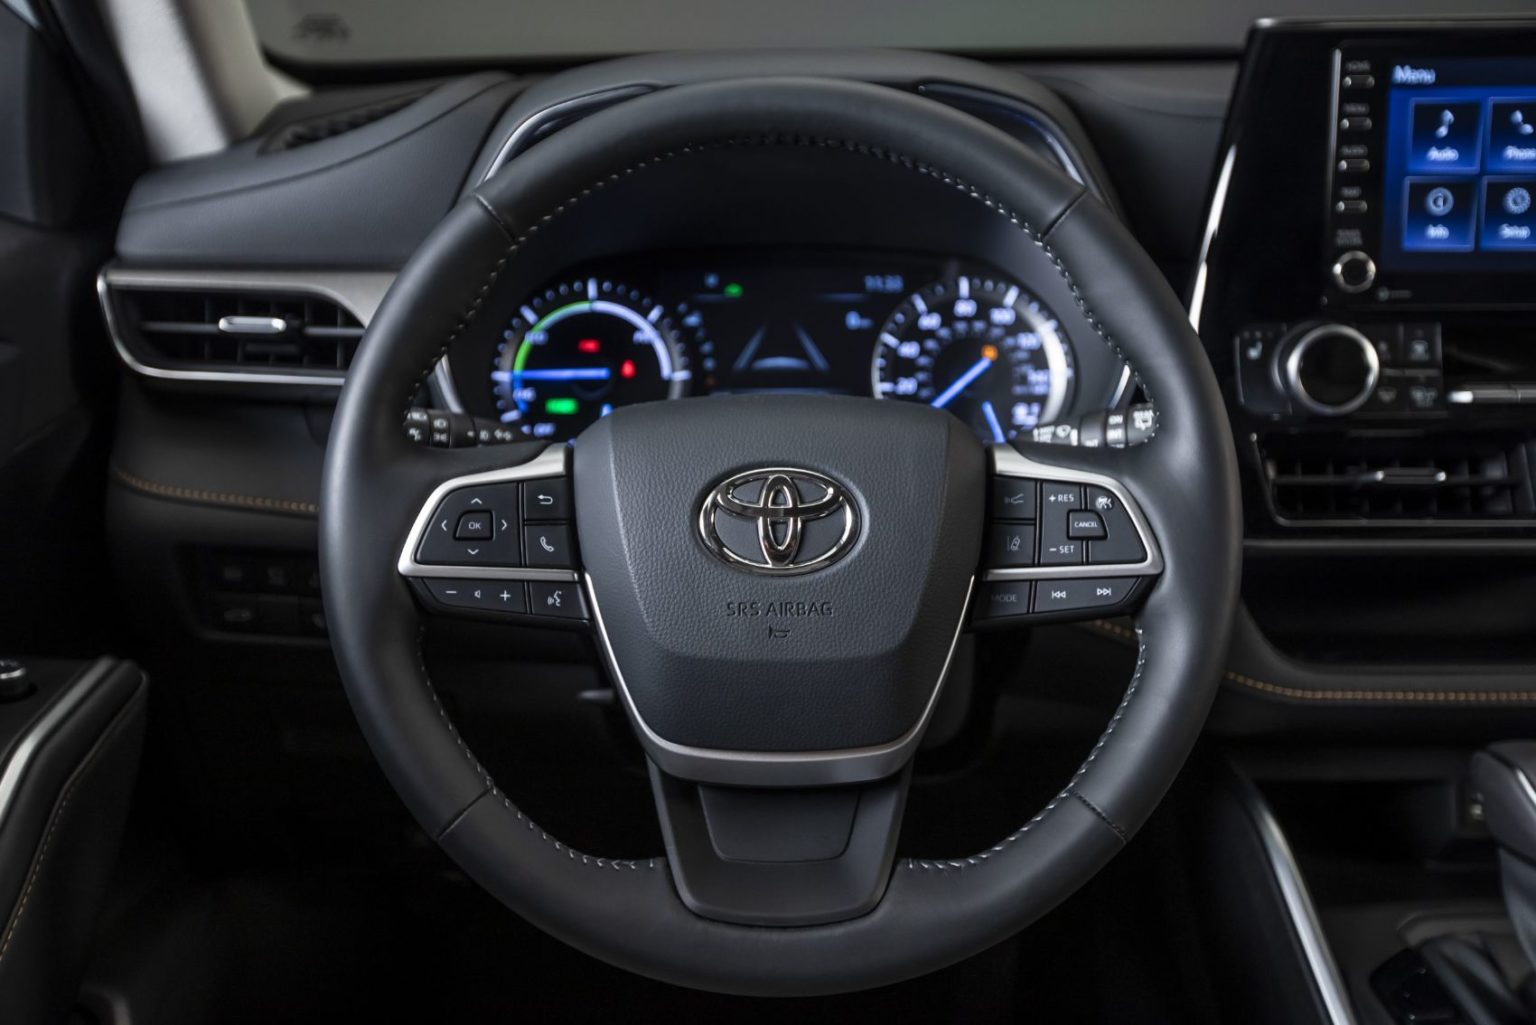 2022 Toyota Highlander Hybrid Bronze Edition: Adding The Golden Touch